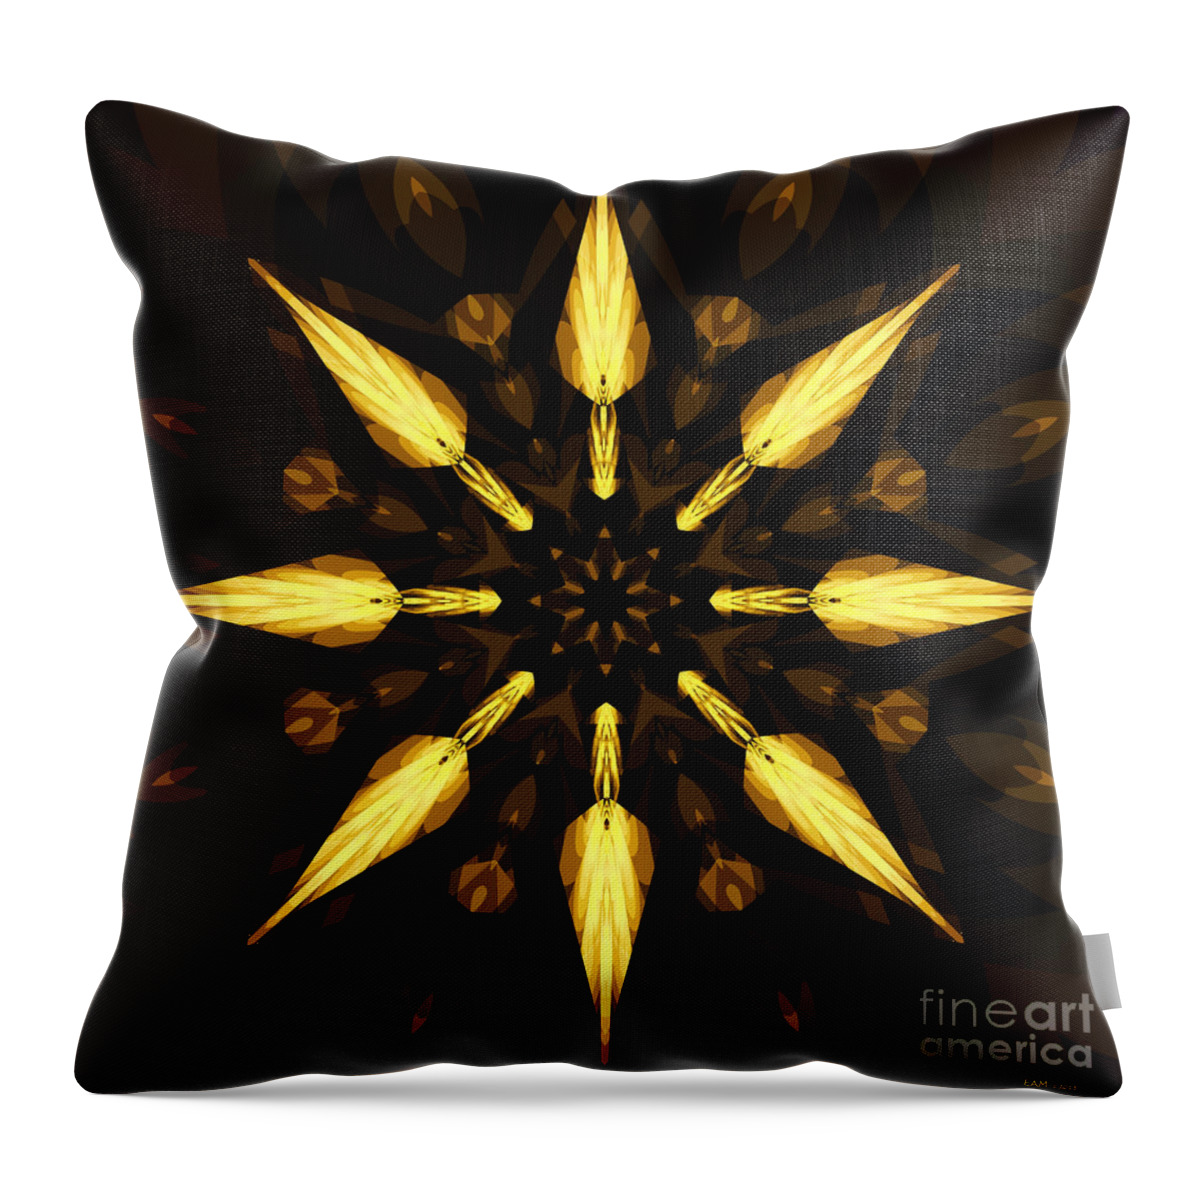 Fractal Art Throw Pillow featuring the digital art Golden Arrows by Elizabeth McTaggart